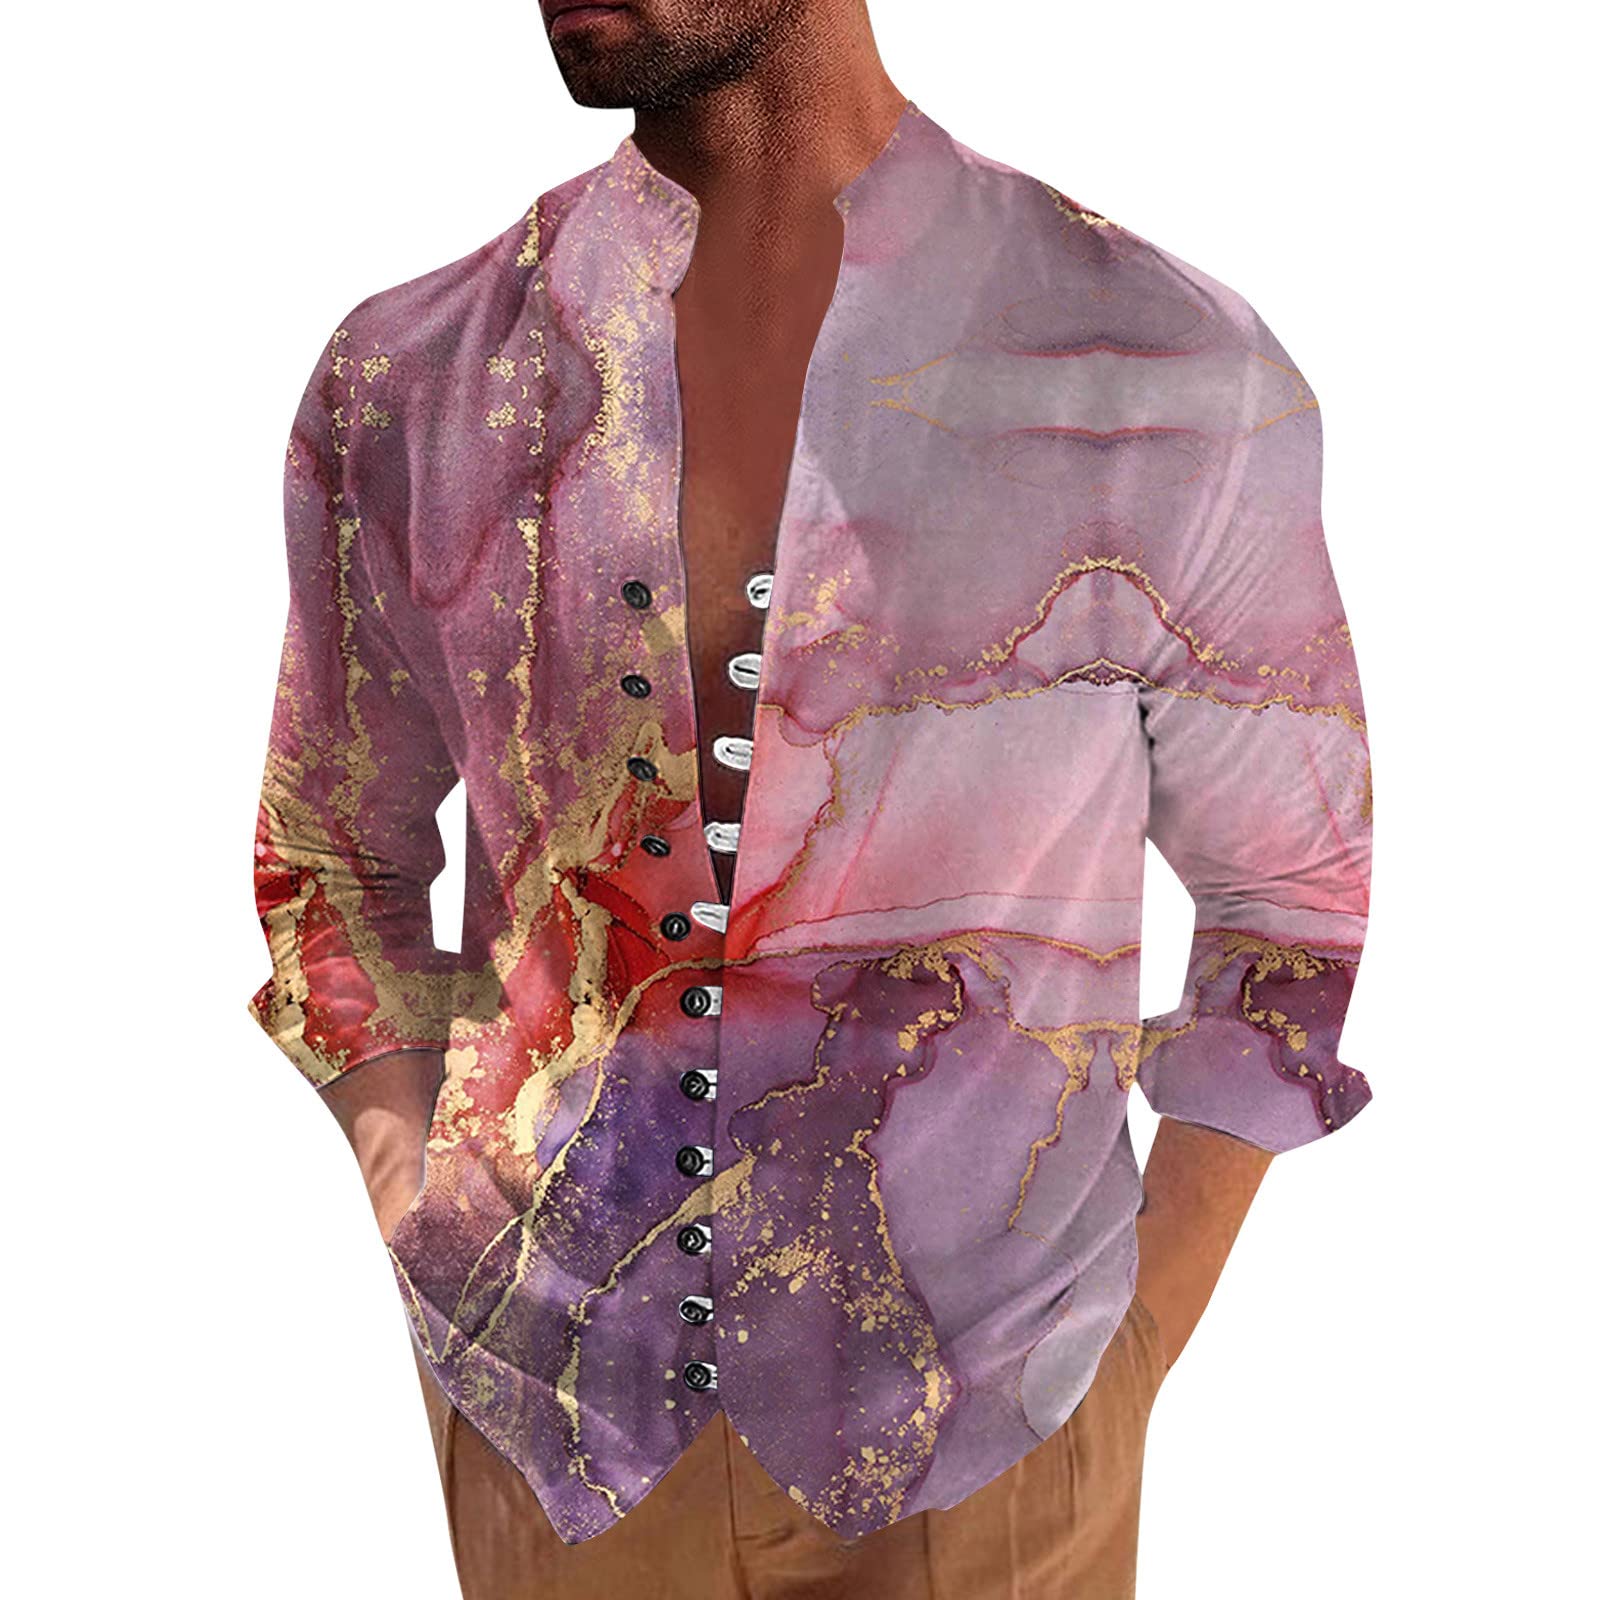 Flower shirt 2023 new summer men's long-sleeved shirt printed